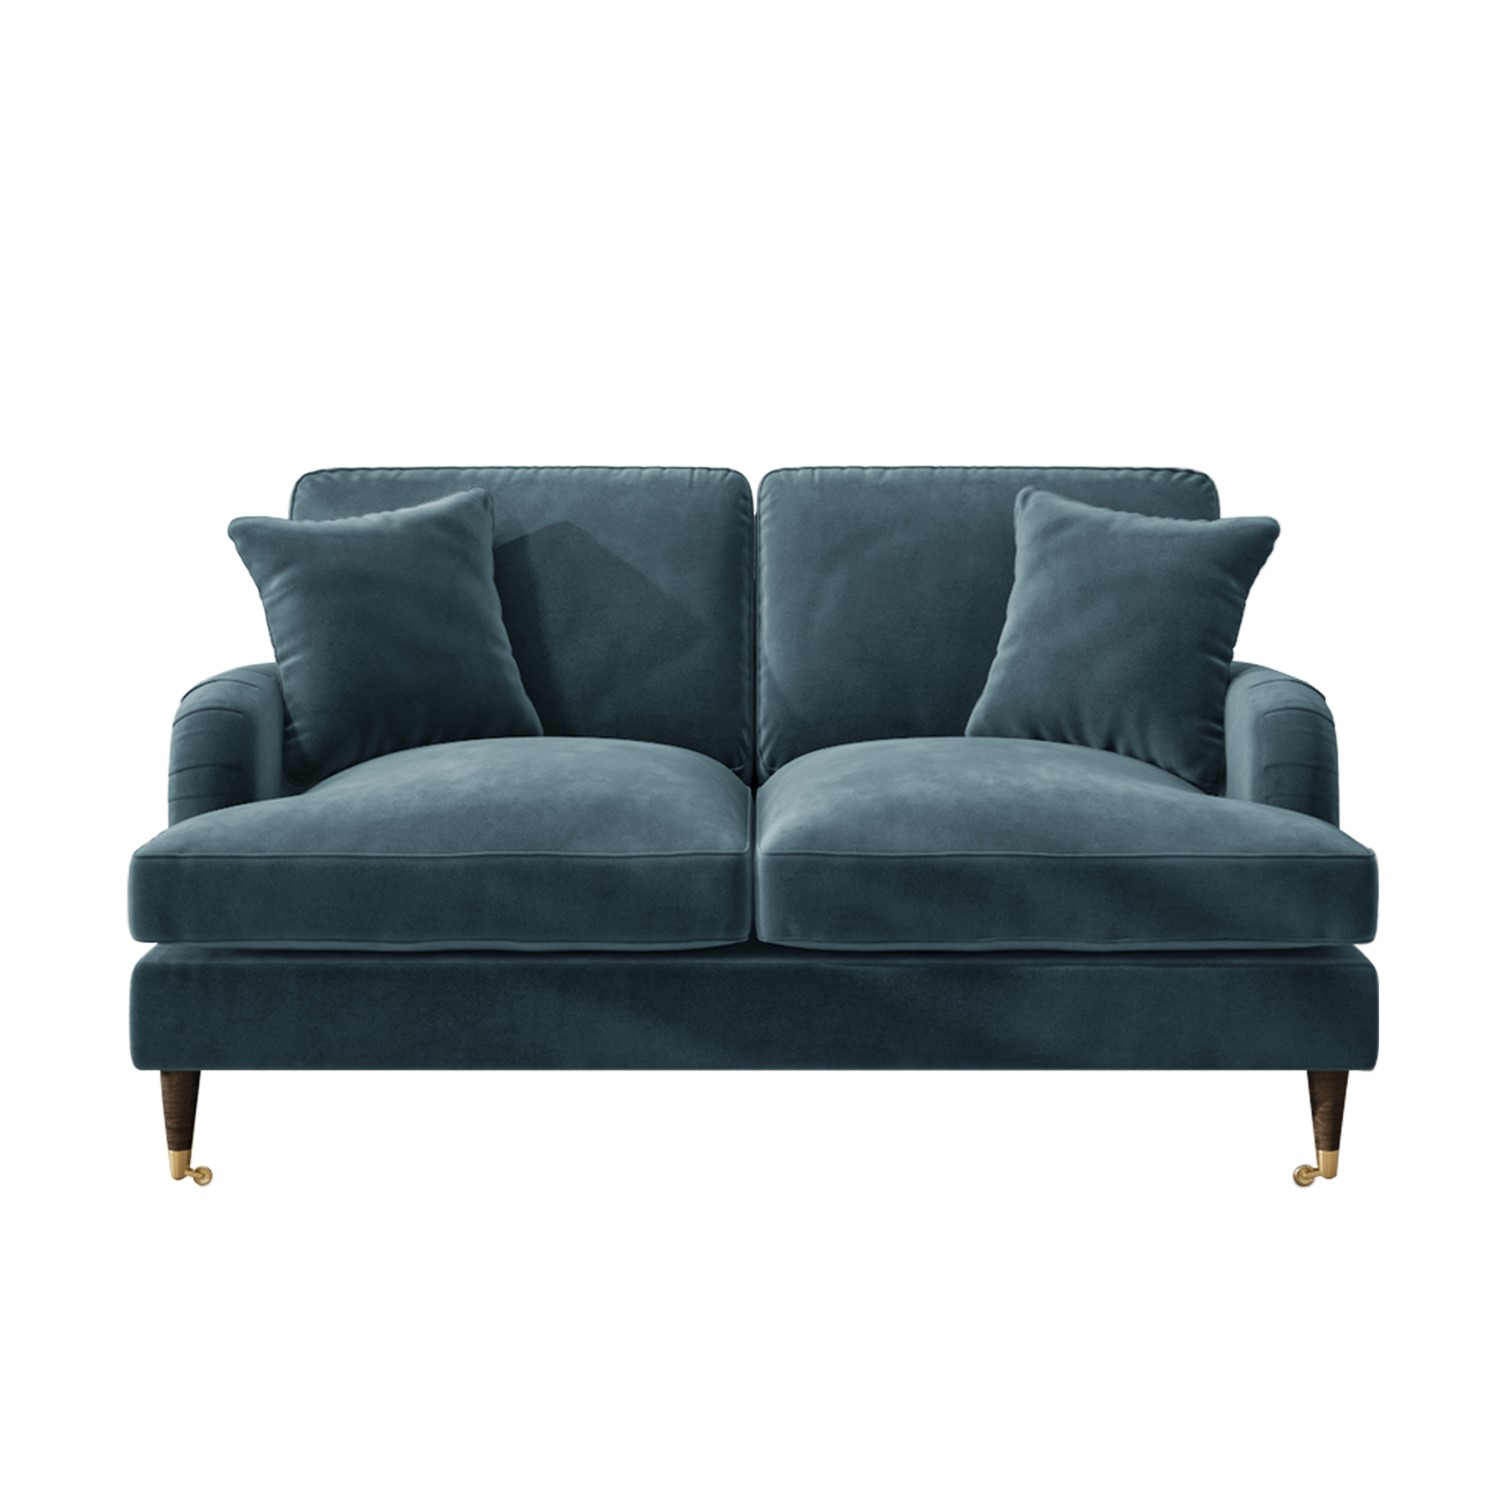 Read more about Petrol blue velvet 2 seater sofa payton